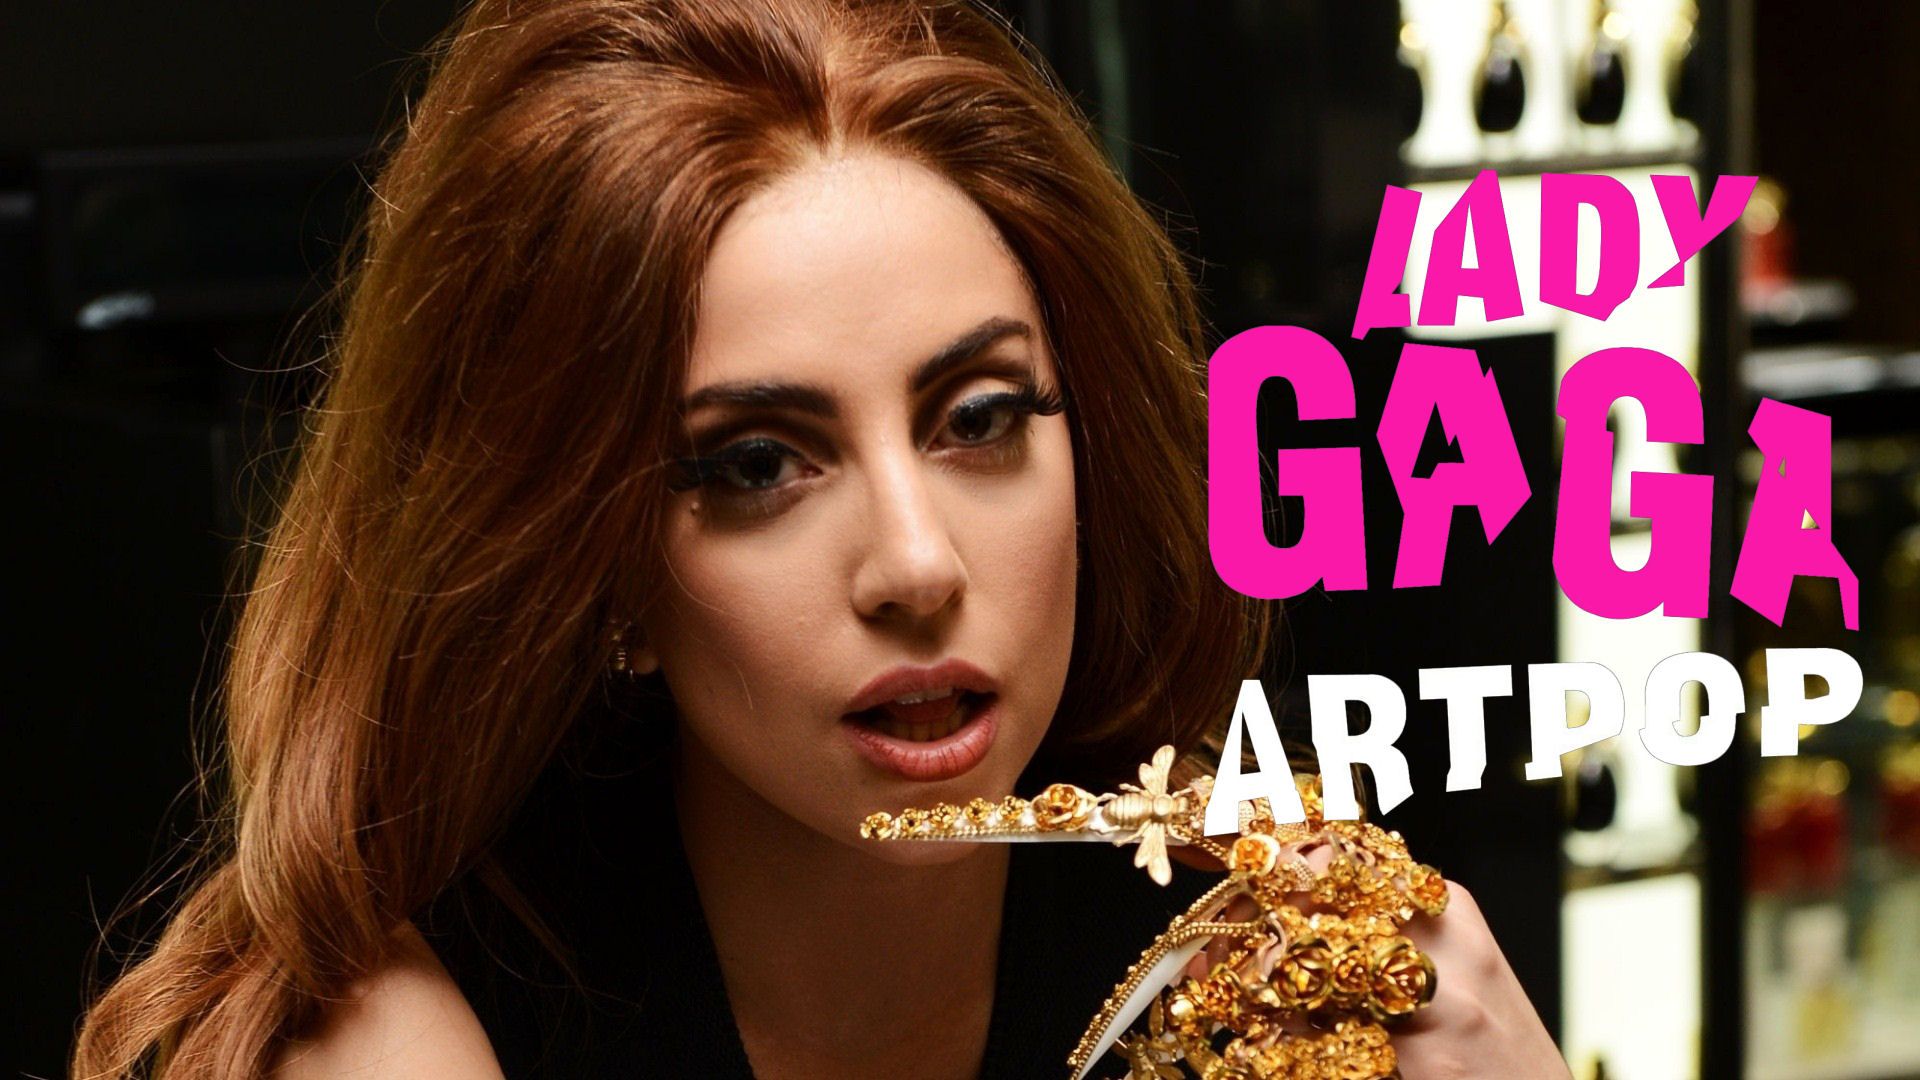 Lady Gaga Artpop HD Image Wallpaper Image